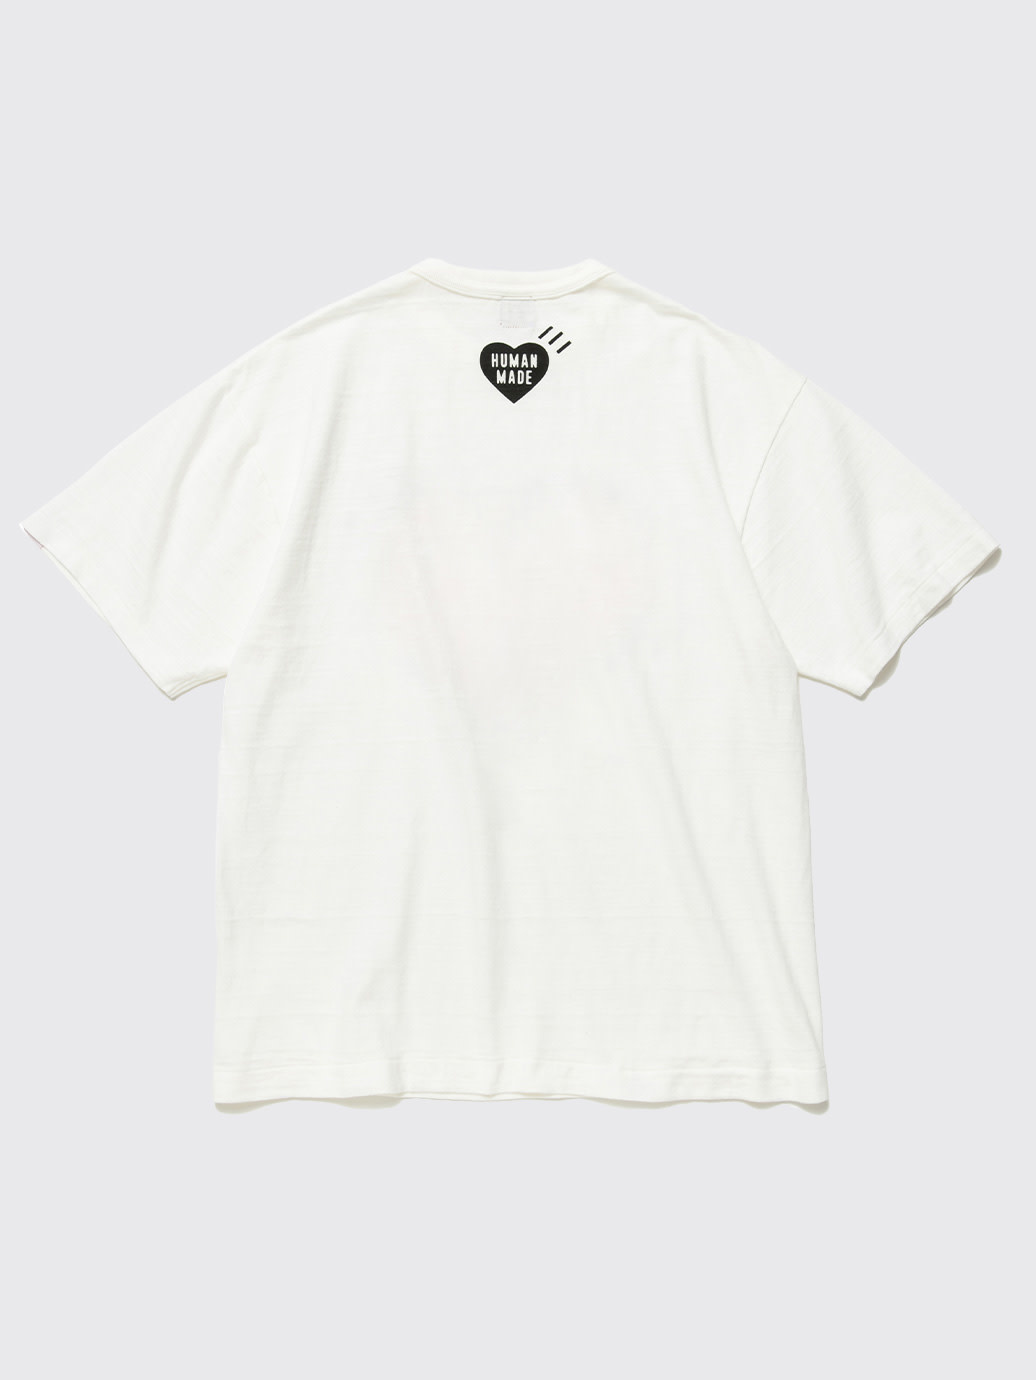 Human Made T-Shirt #12 Heart Logo FW22 White - OALLERY